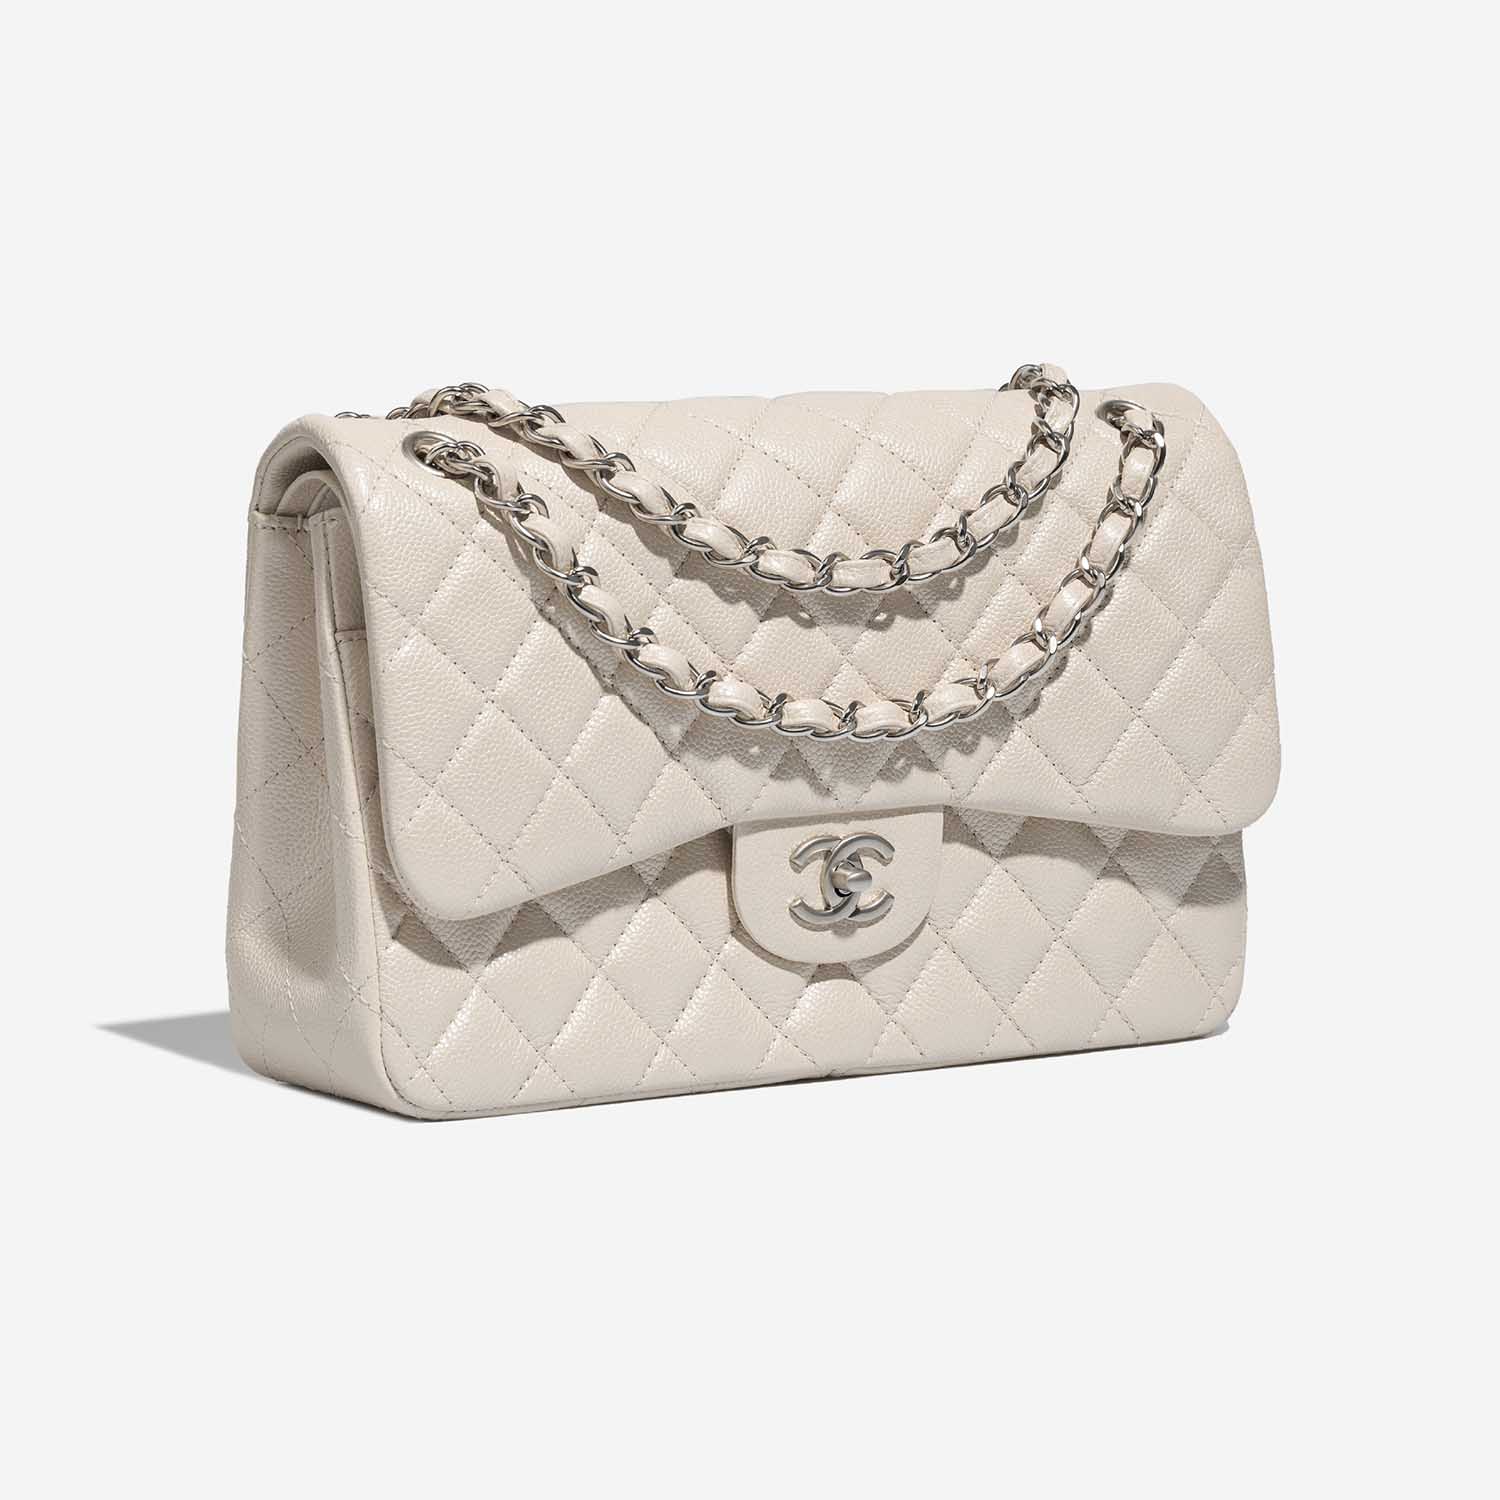 Chanel Pre-owned Jumbo Timeless Shoulder Bag